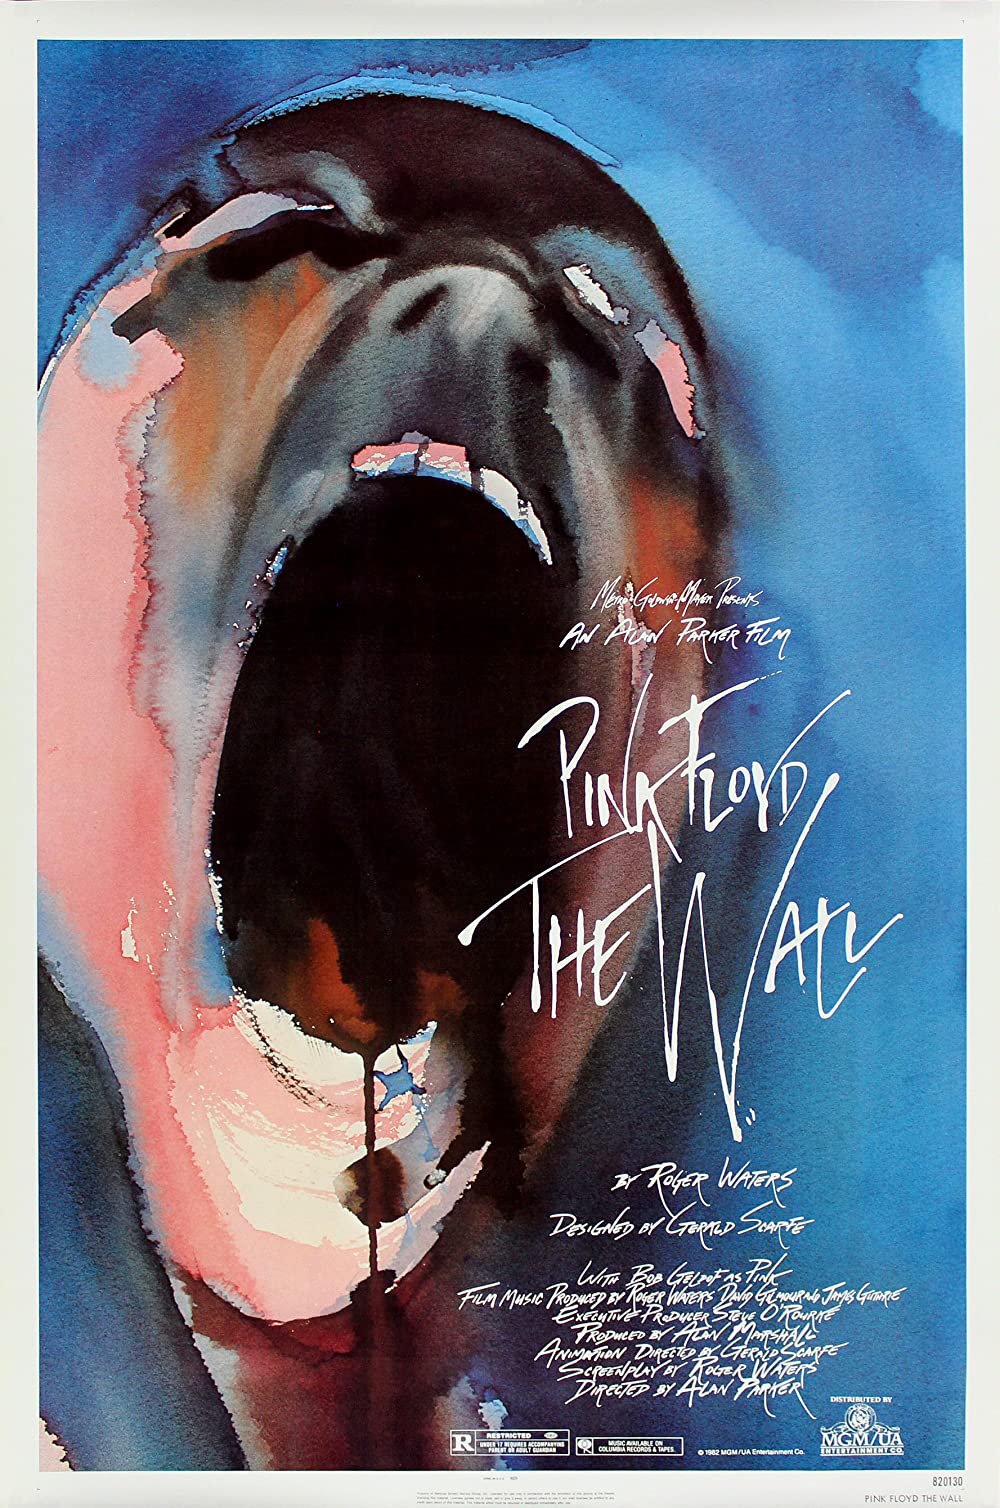 Filmbeschreibung zu Pink Floyd: The Wall (OV)